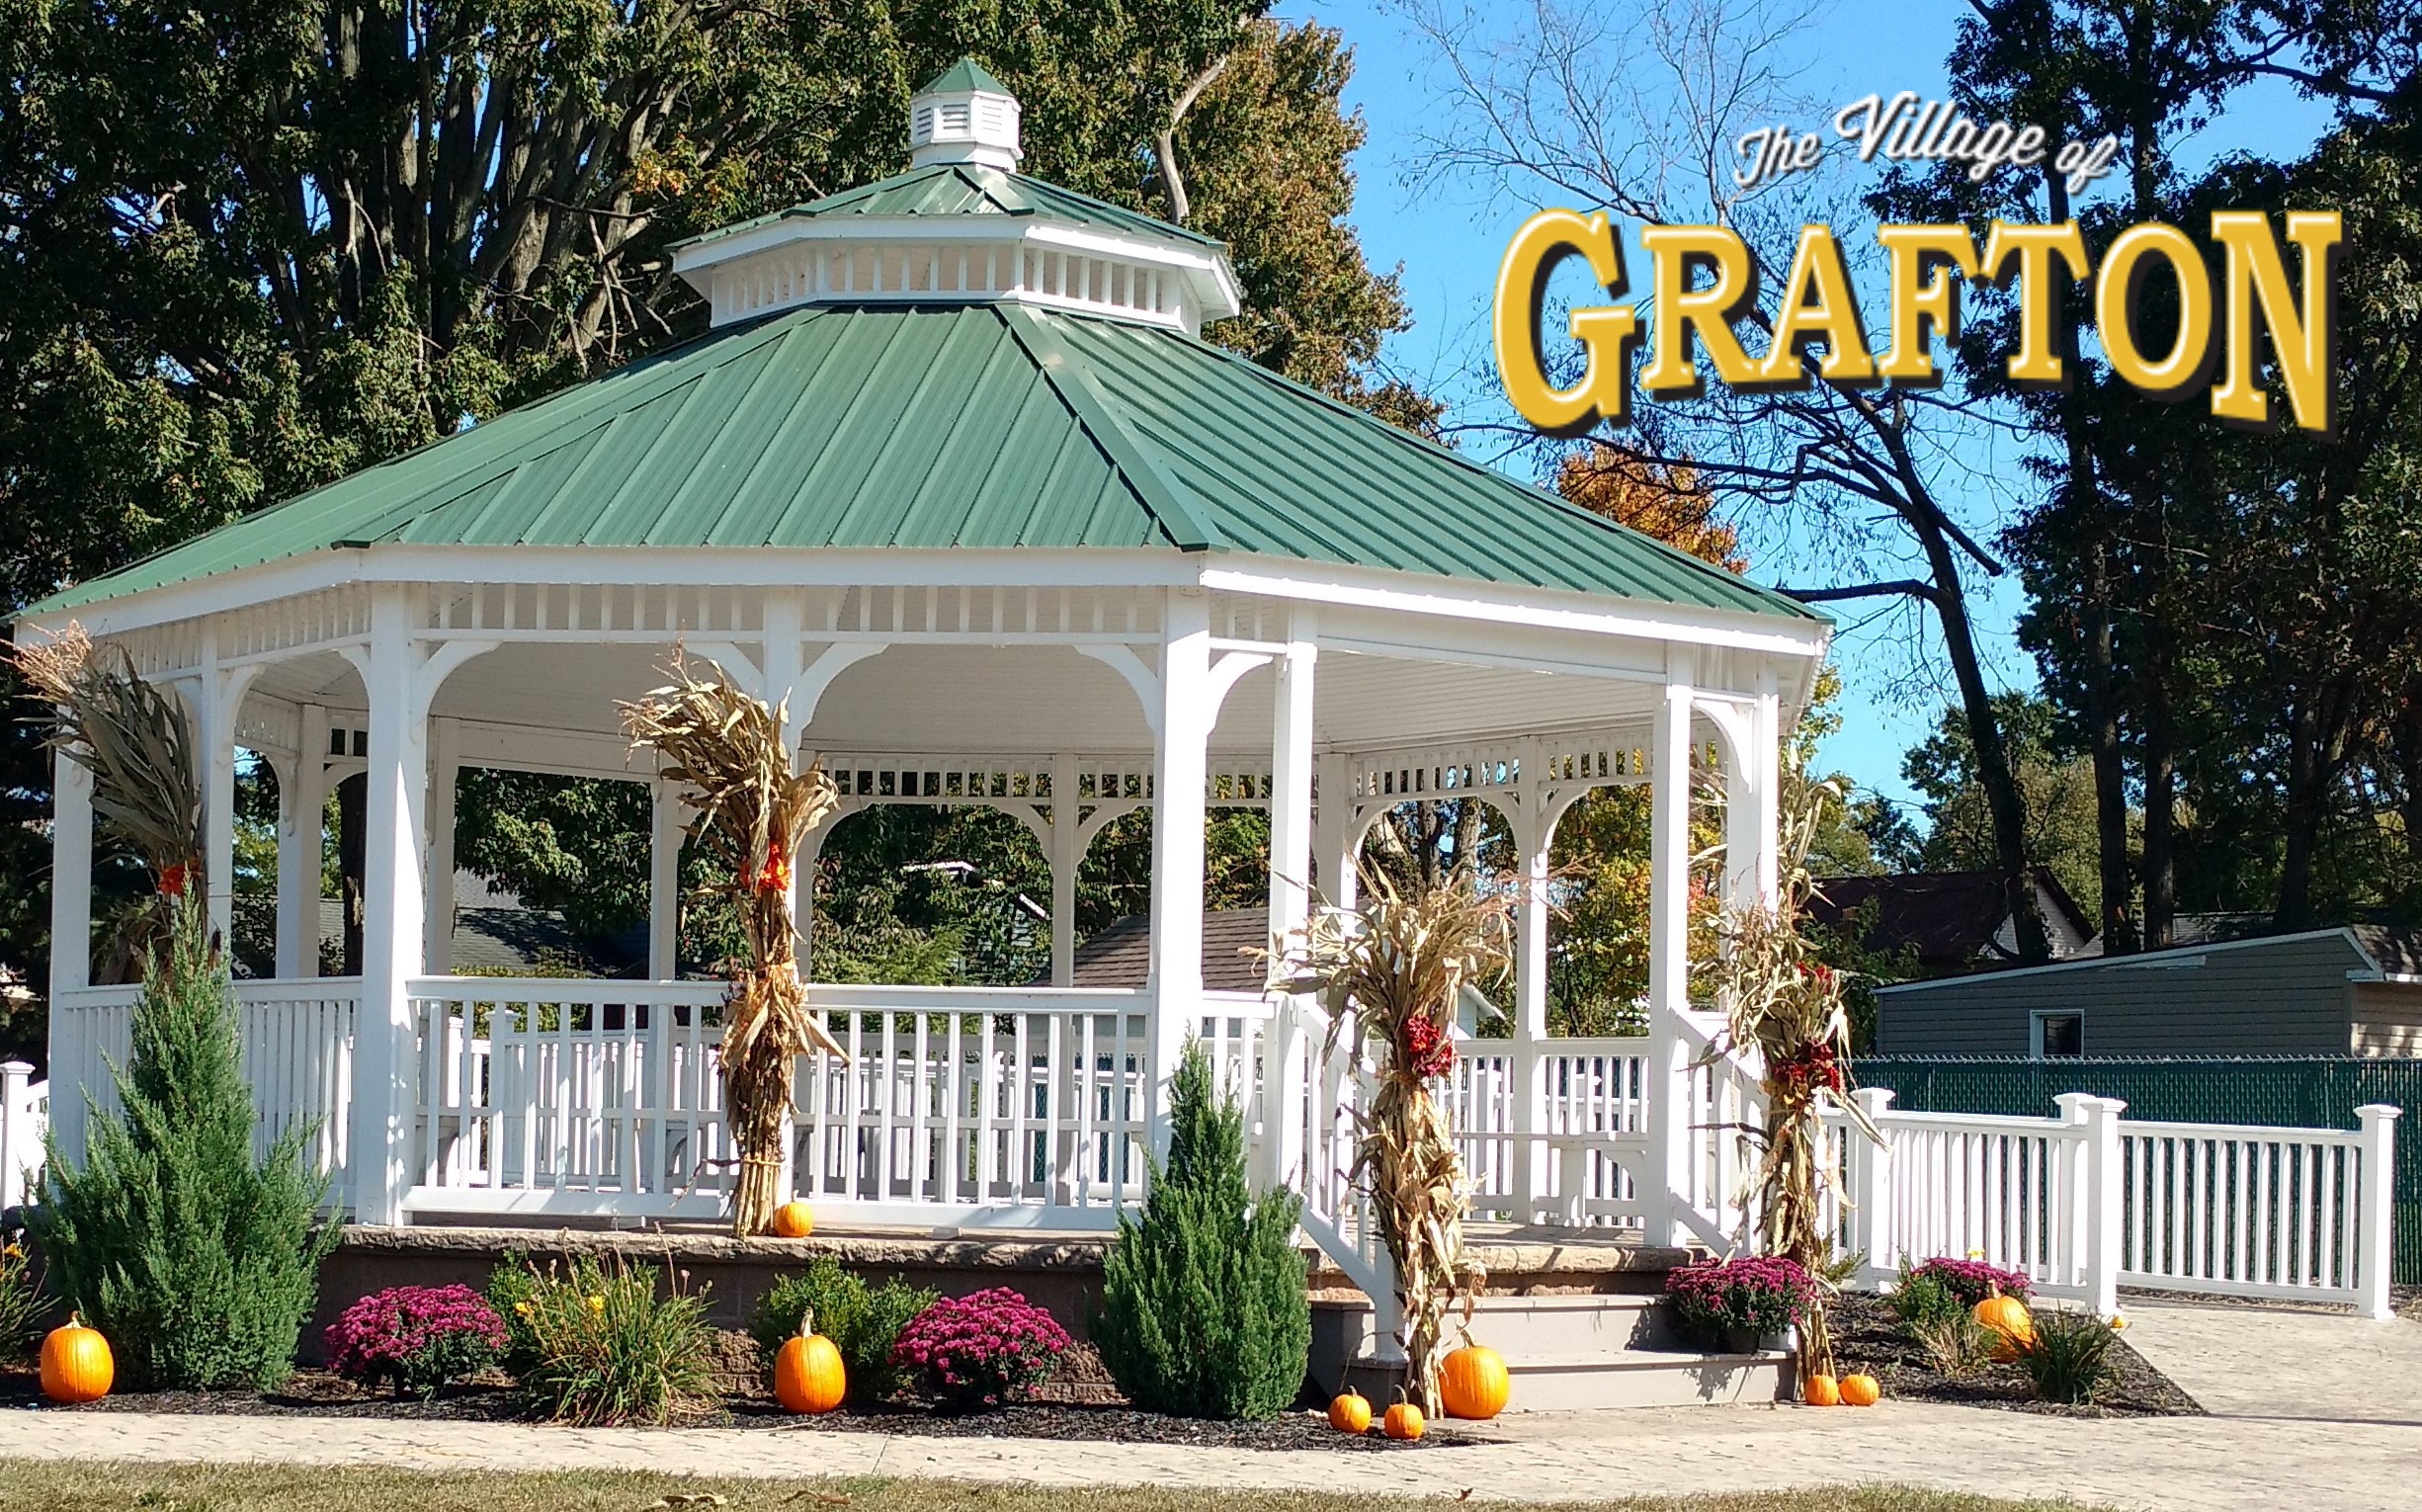 Village of Grafton Grafton, Ohio